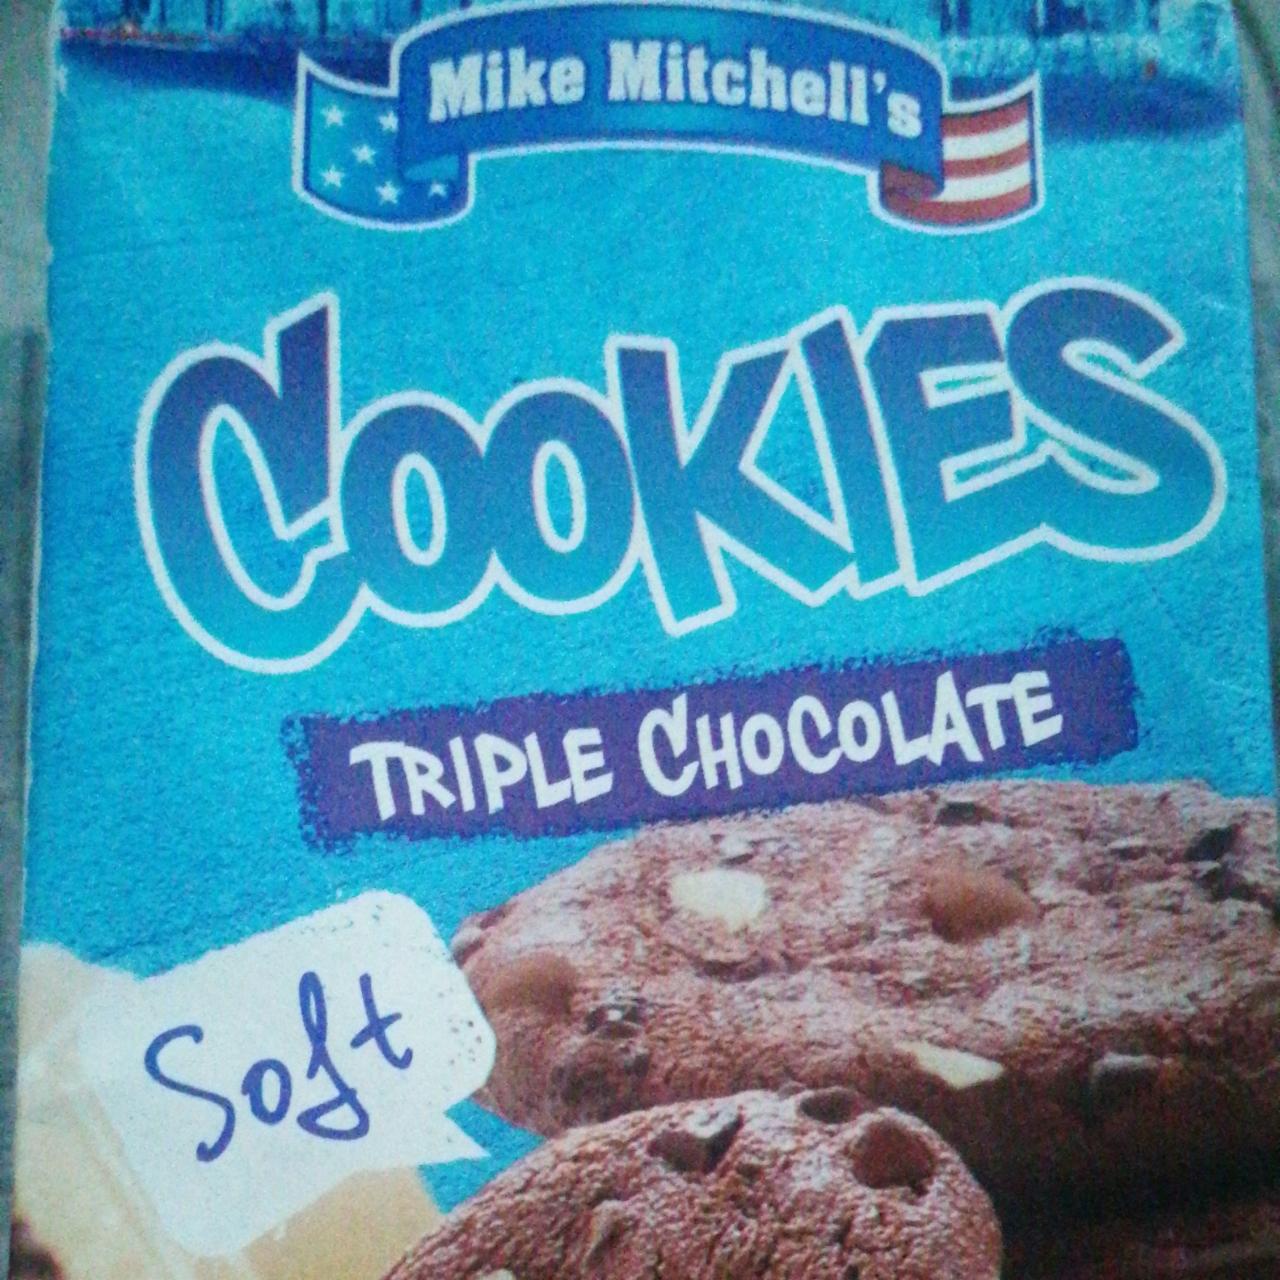 Képek - Cookies Triple chocolate Mike Mitchell's